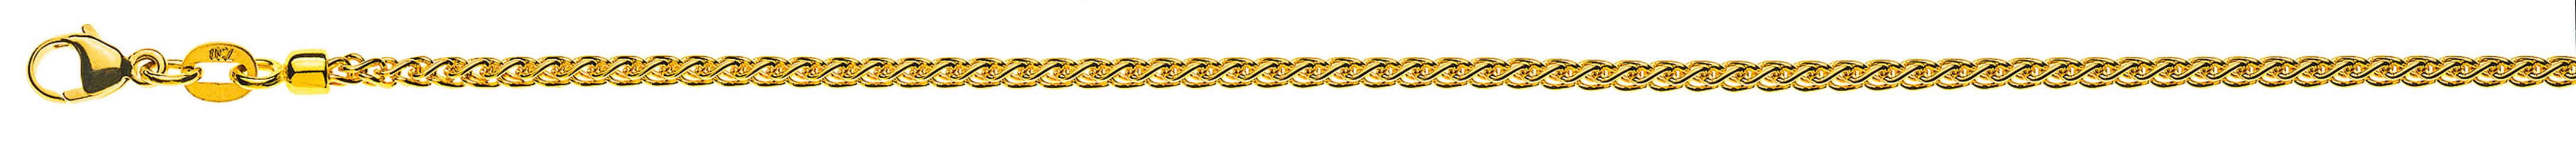 AURONOS Prestige Necklace yellow gold 18K cable chain 60cm 2.15mm